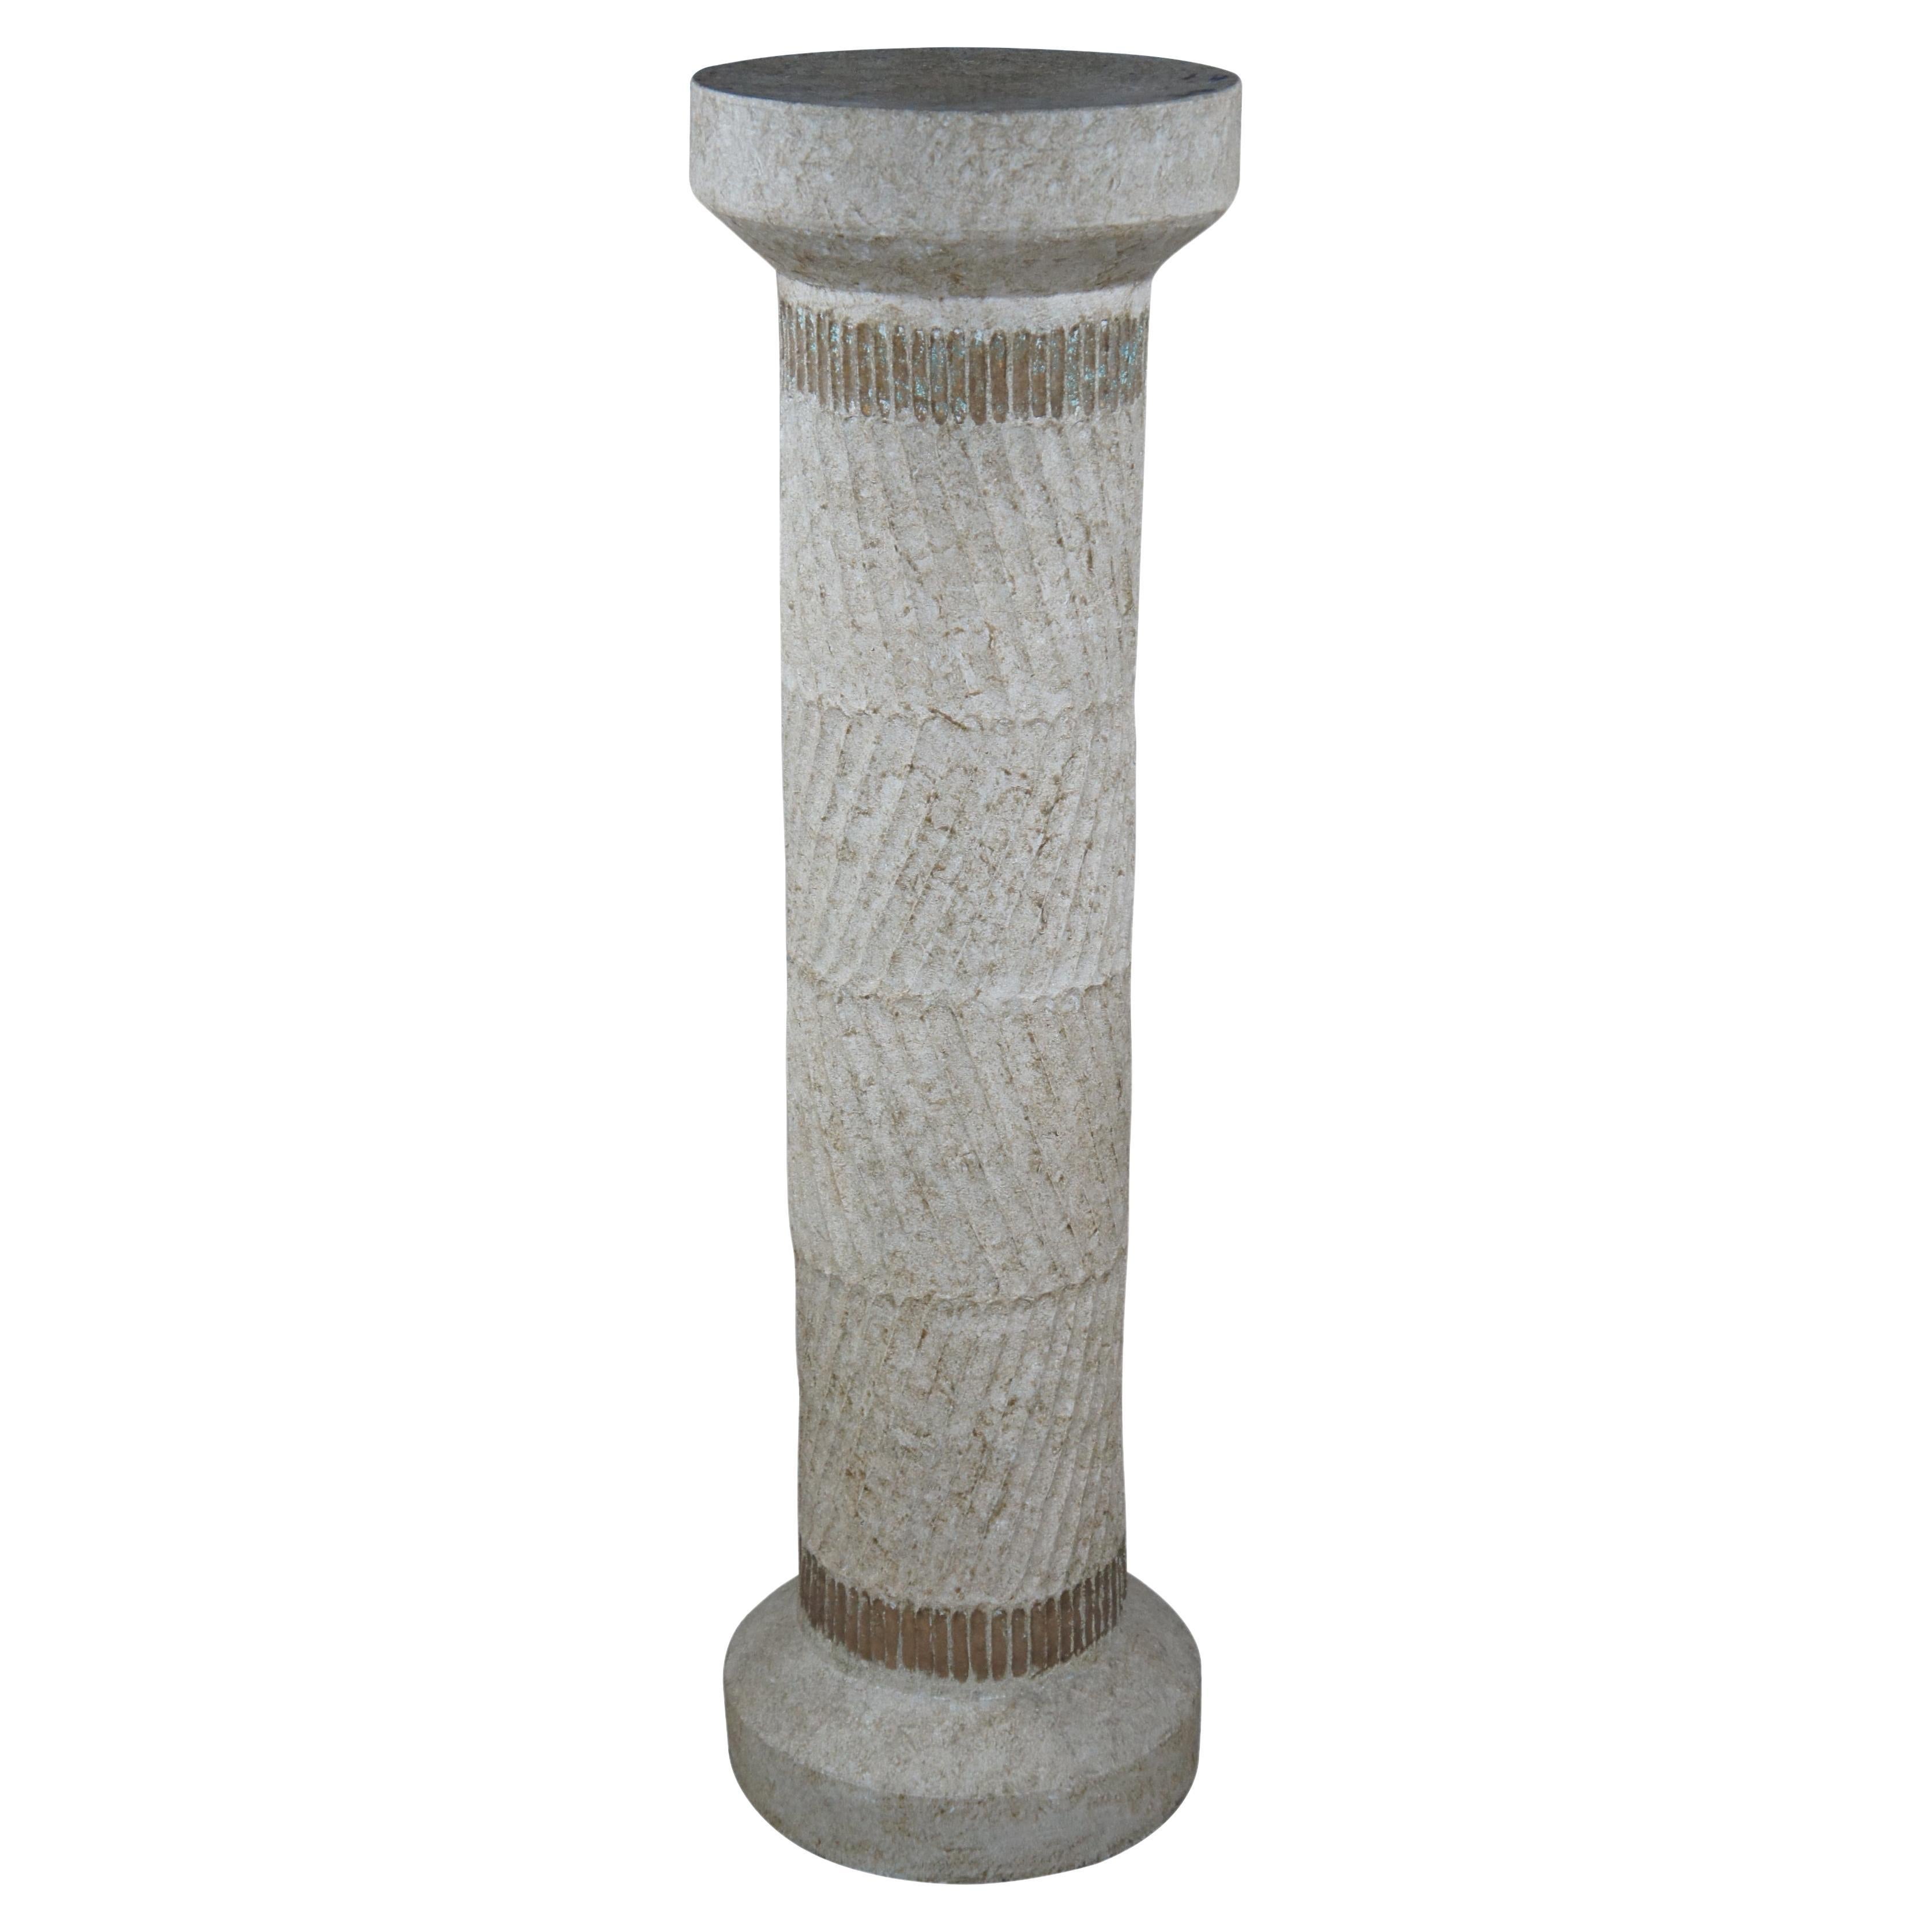 Neoclassical Plaster Column Sculpture Pedestal Plant Fern Display Stand 50"